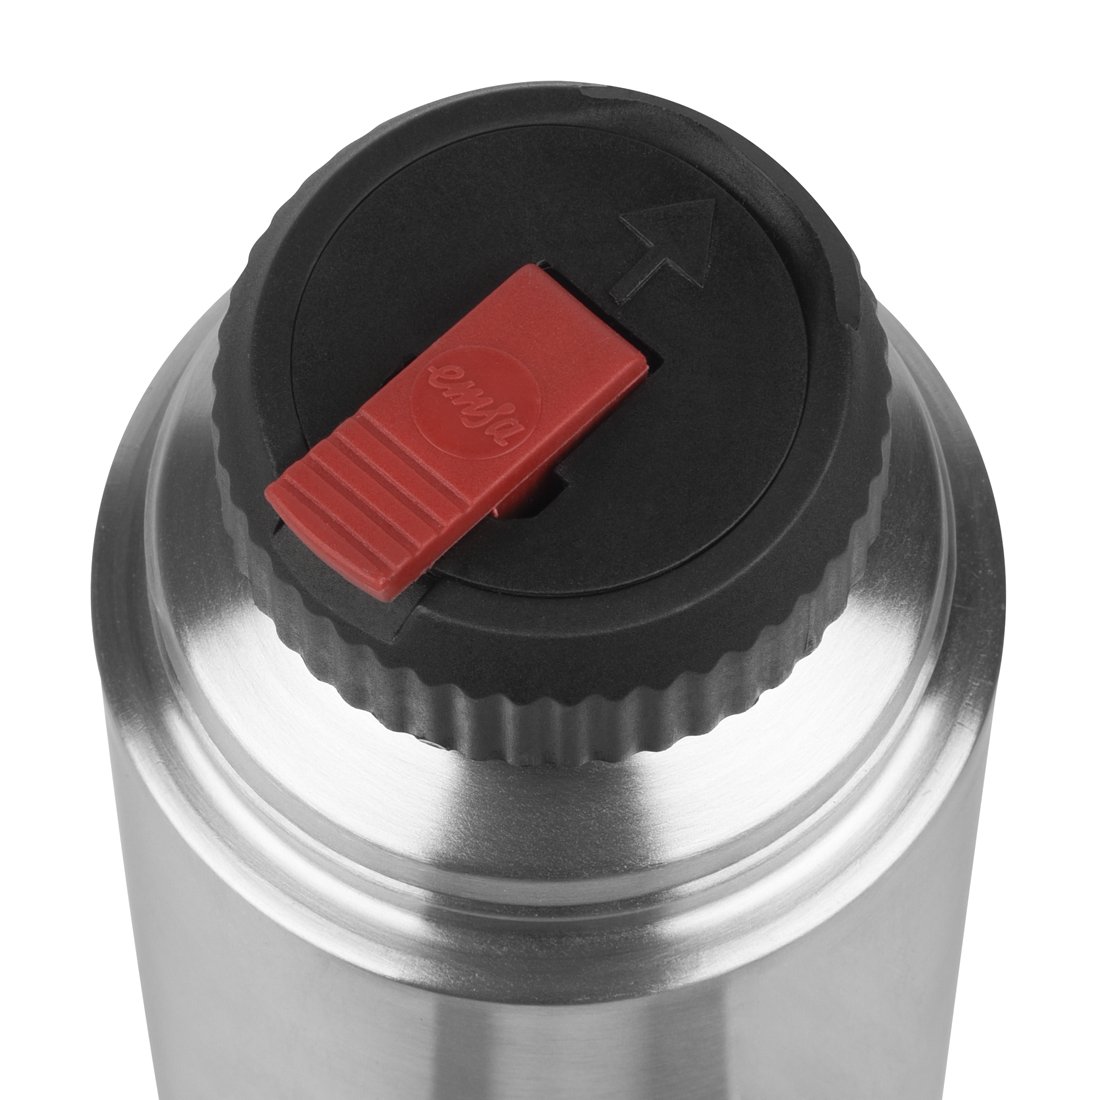 Emsa "Senator" 16.9 oz Vacuum Flask from Stainless Steel, Silver